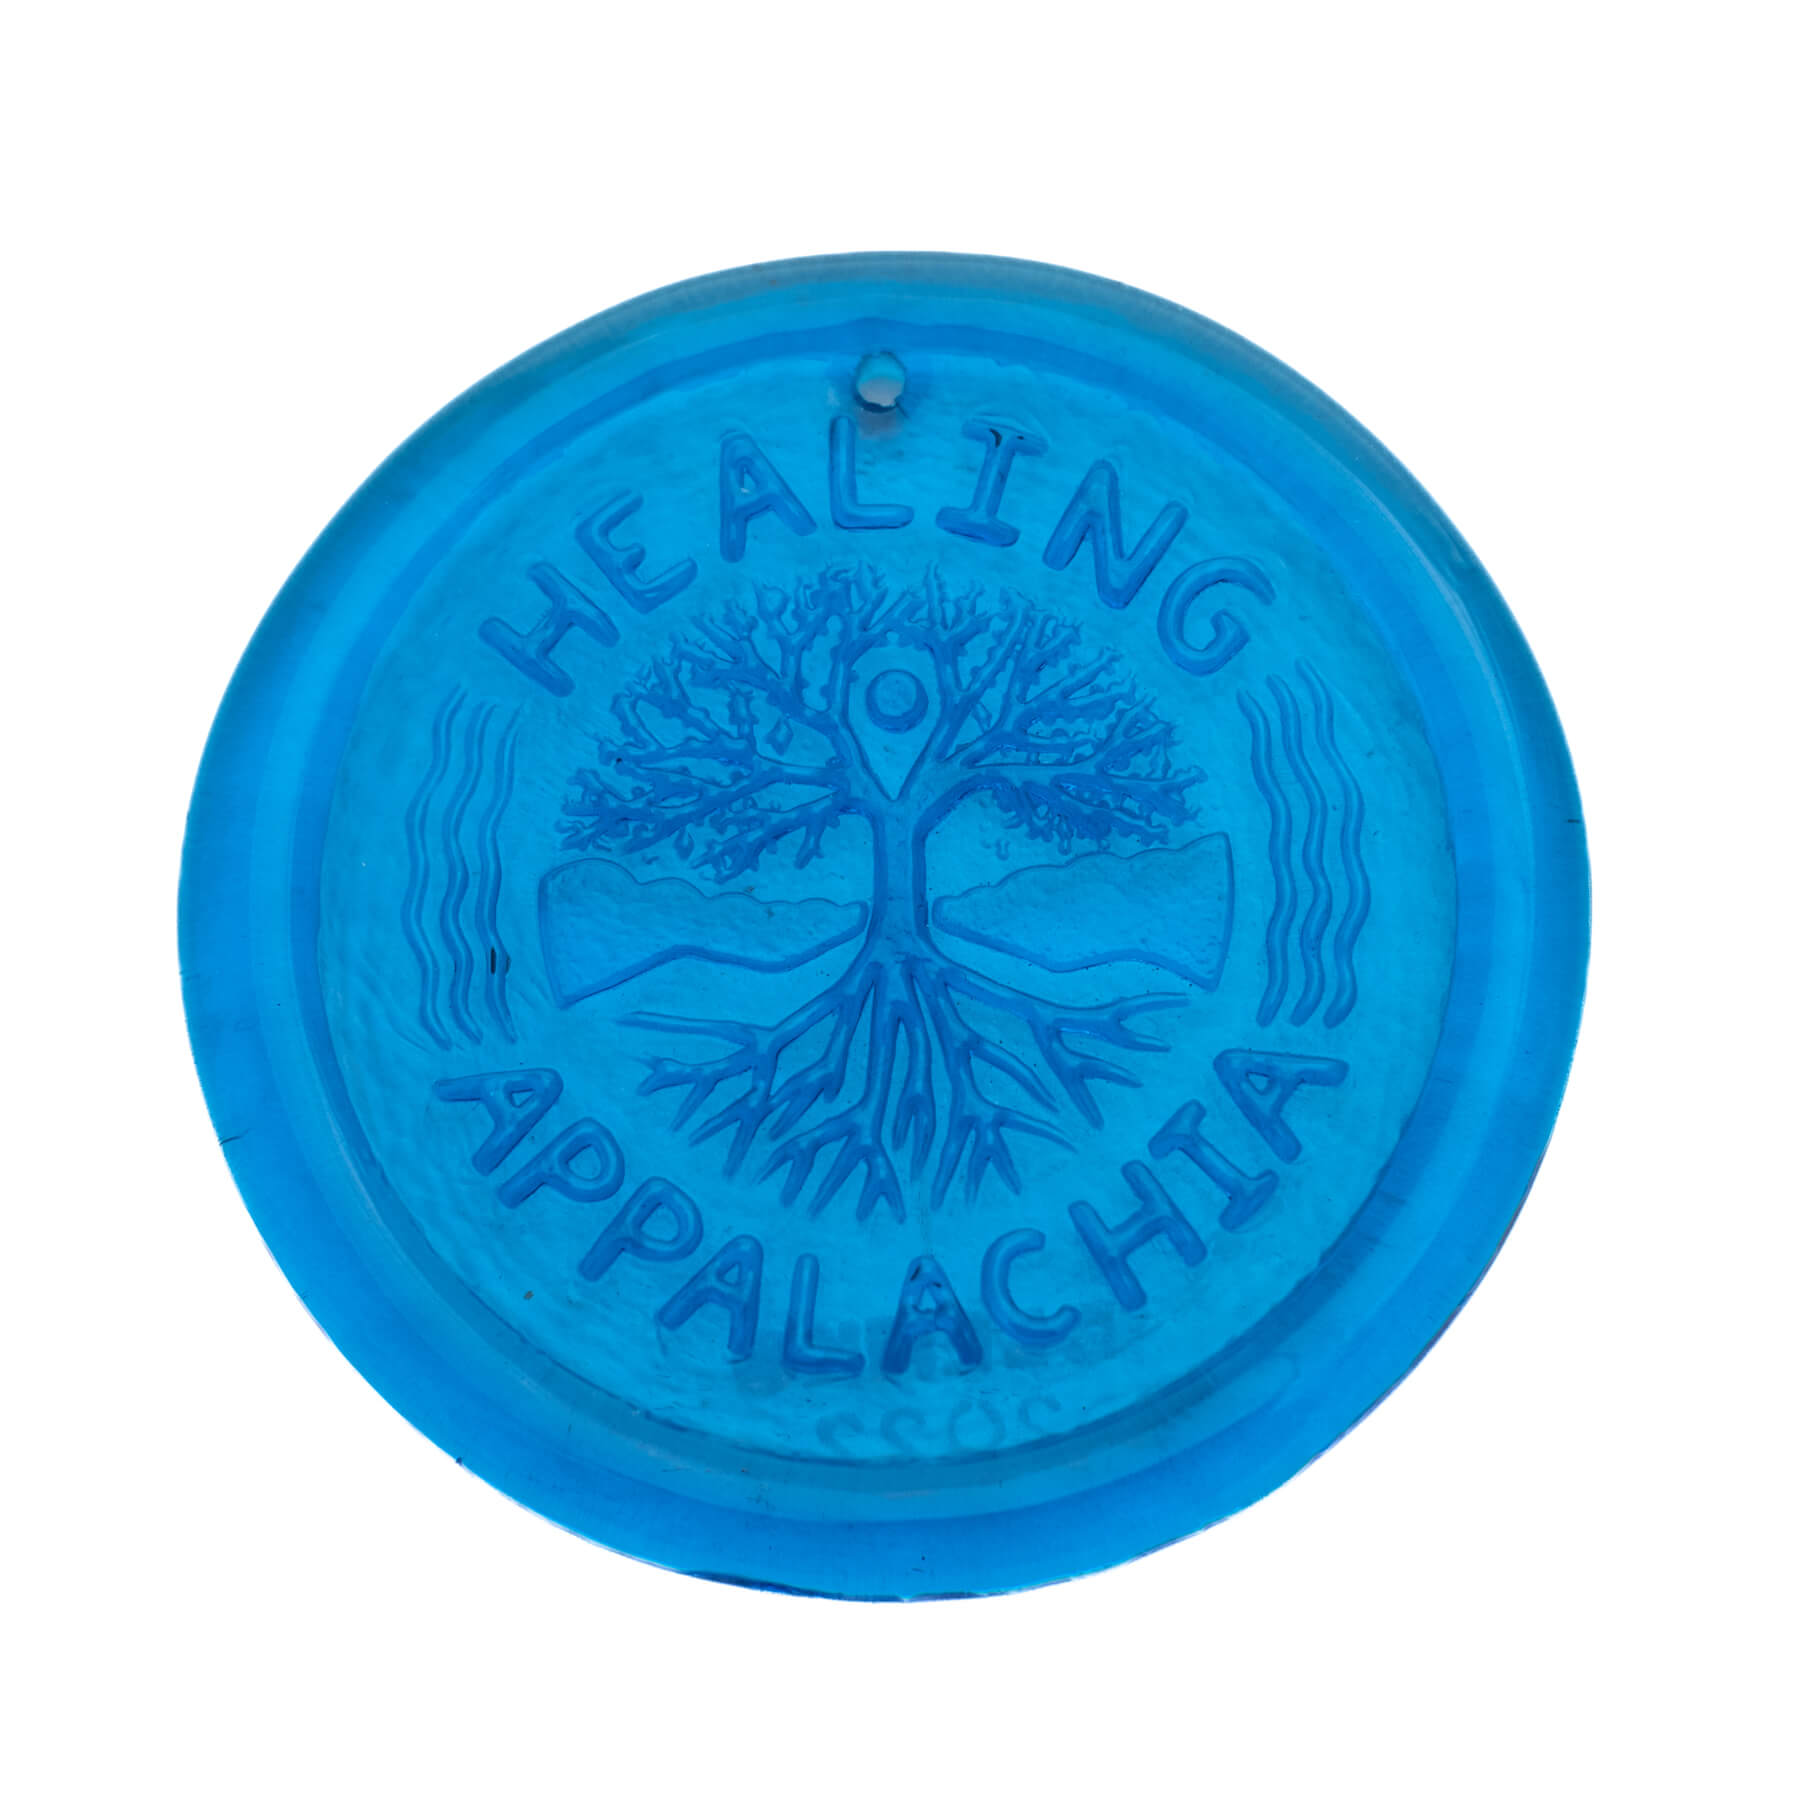 Photo of Blenko Product Healing Appalachia' Suncatcher - Turquoise